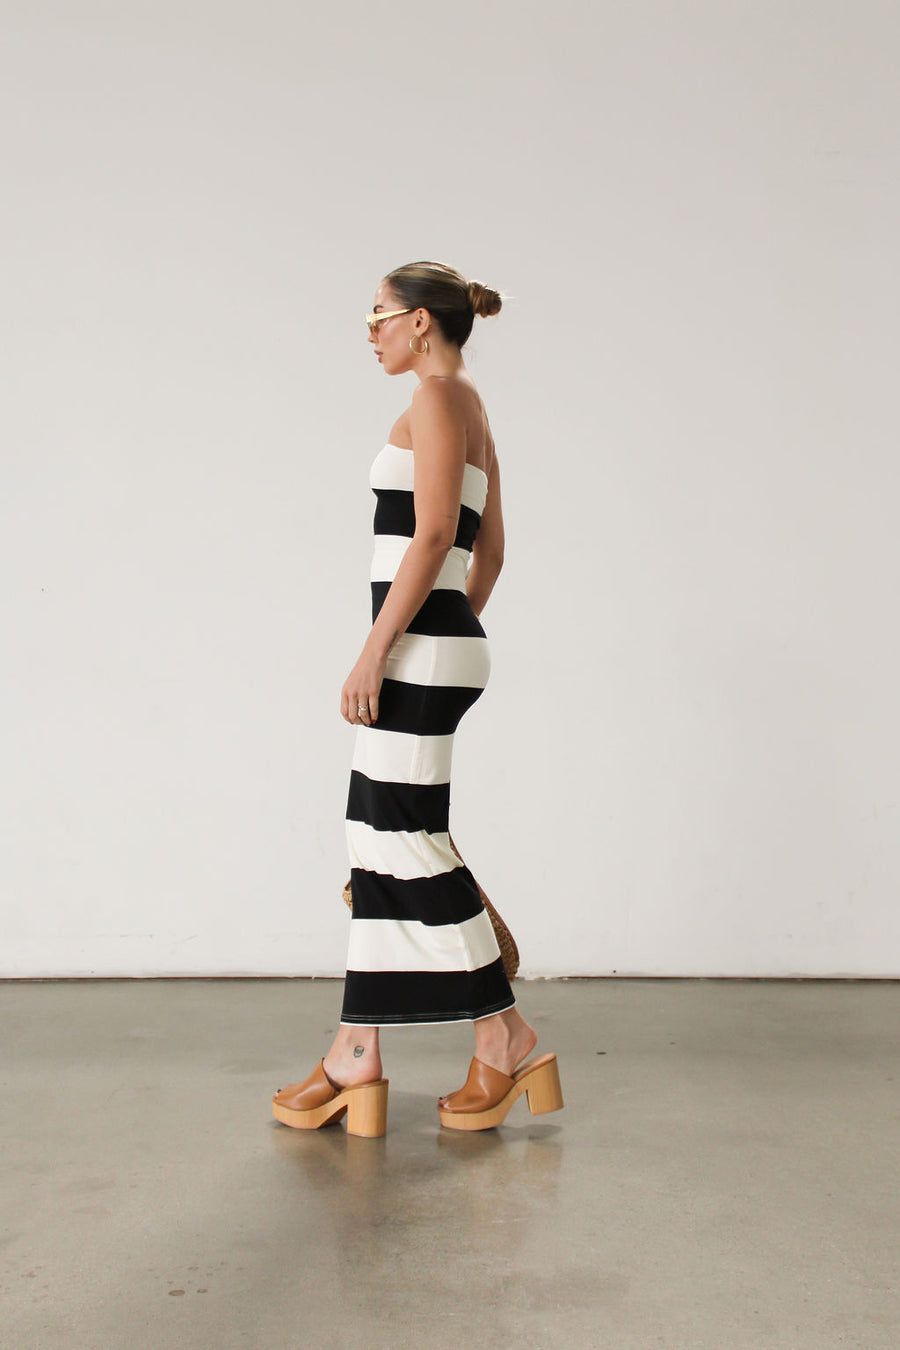 Striped knit maxi dress. Strapless elastic neckline. Fully lined. Stretchy, black and ivory, horizontal stripe maxi dress